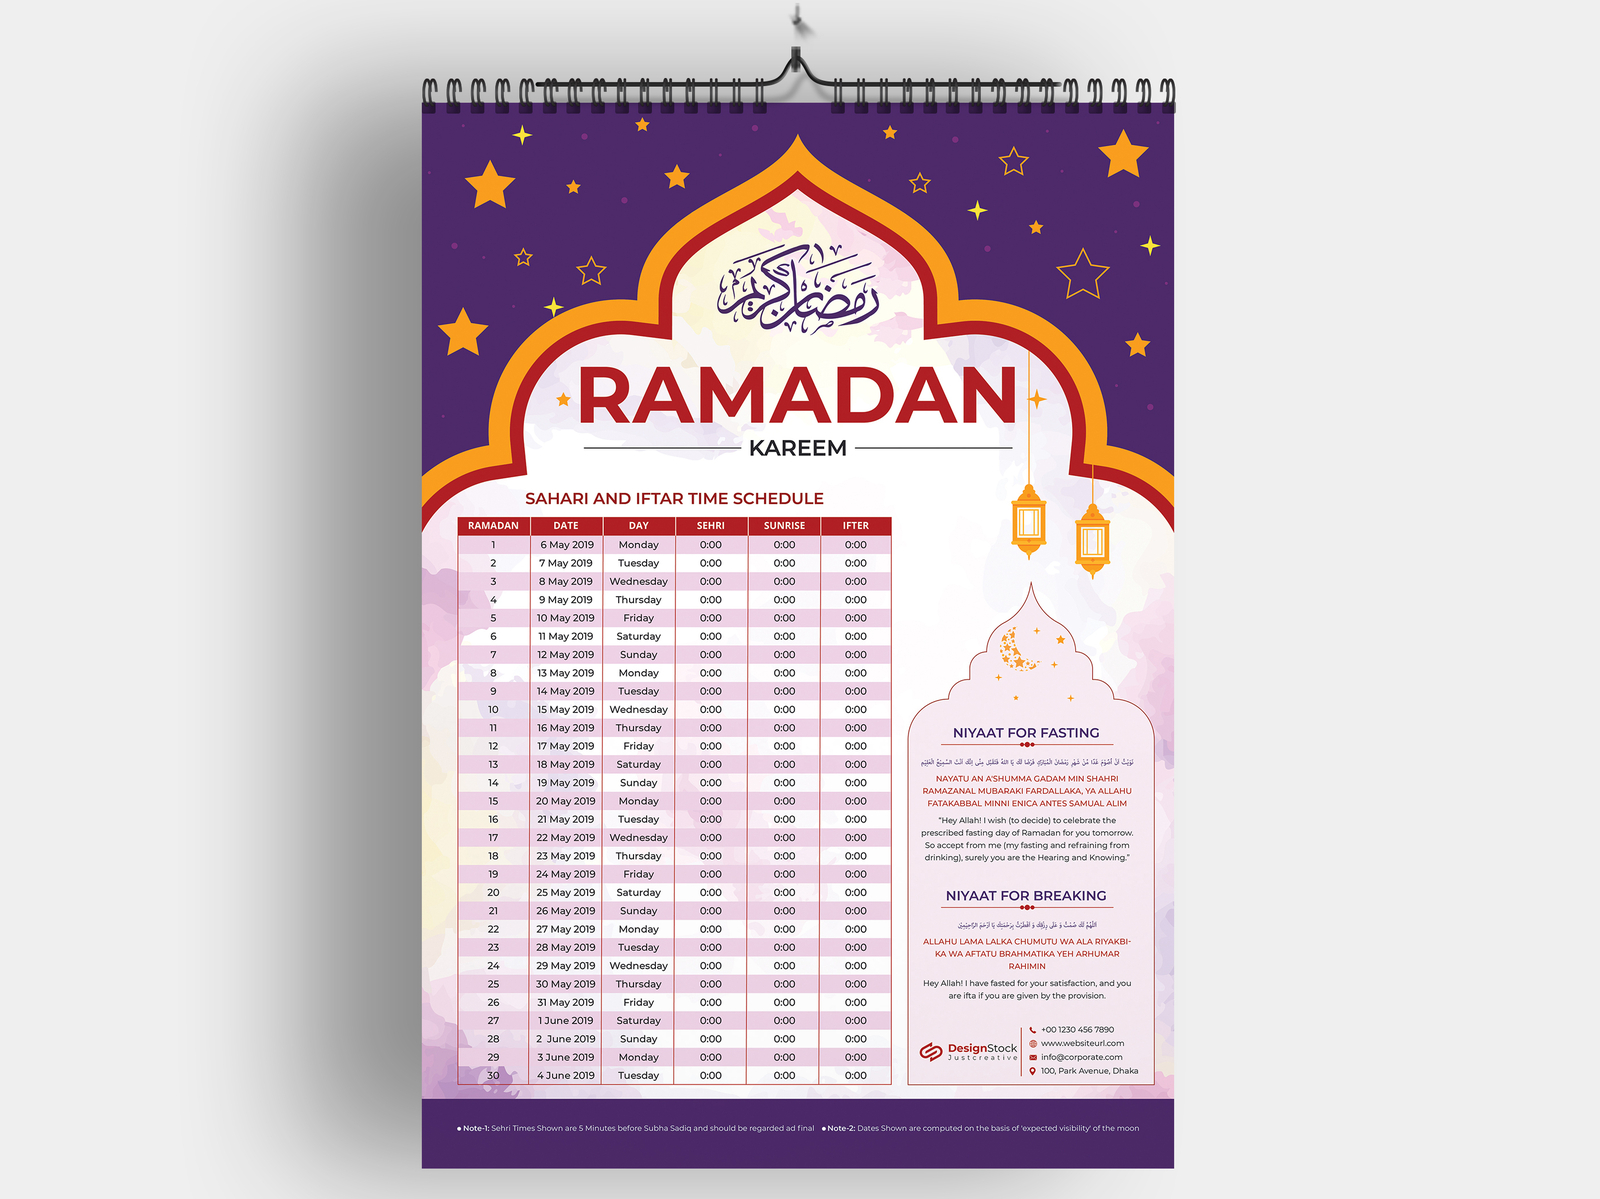 Ramadan Calendar Design Ramadan Sehri Ifter Time Schedule by MH